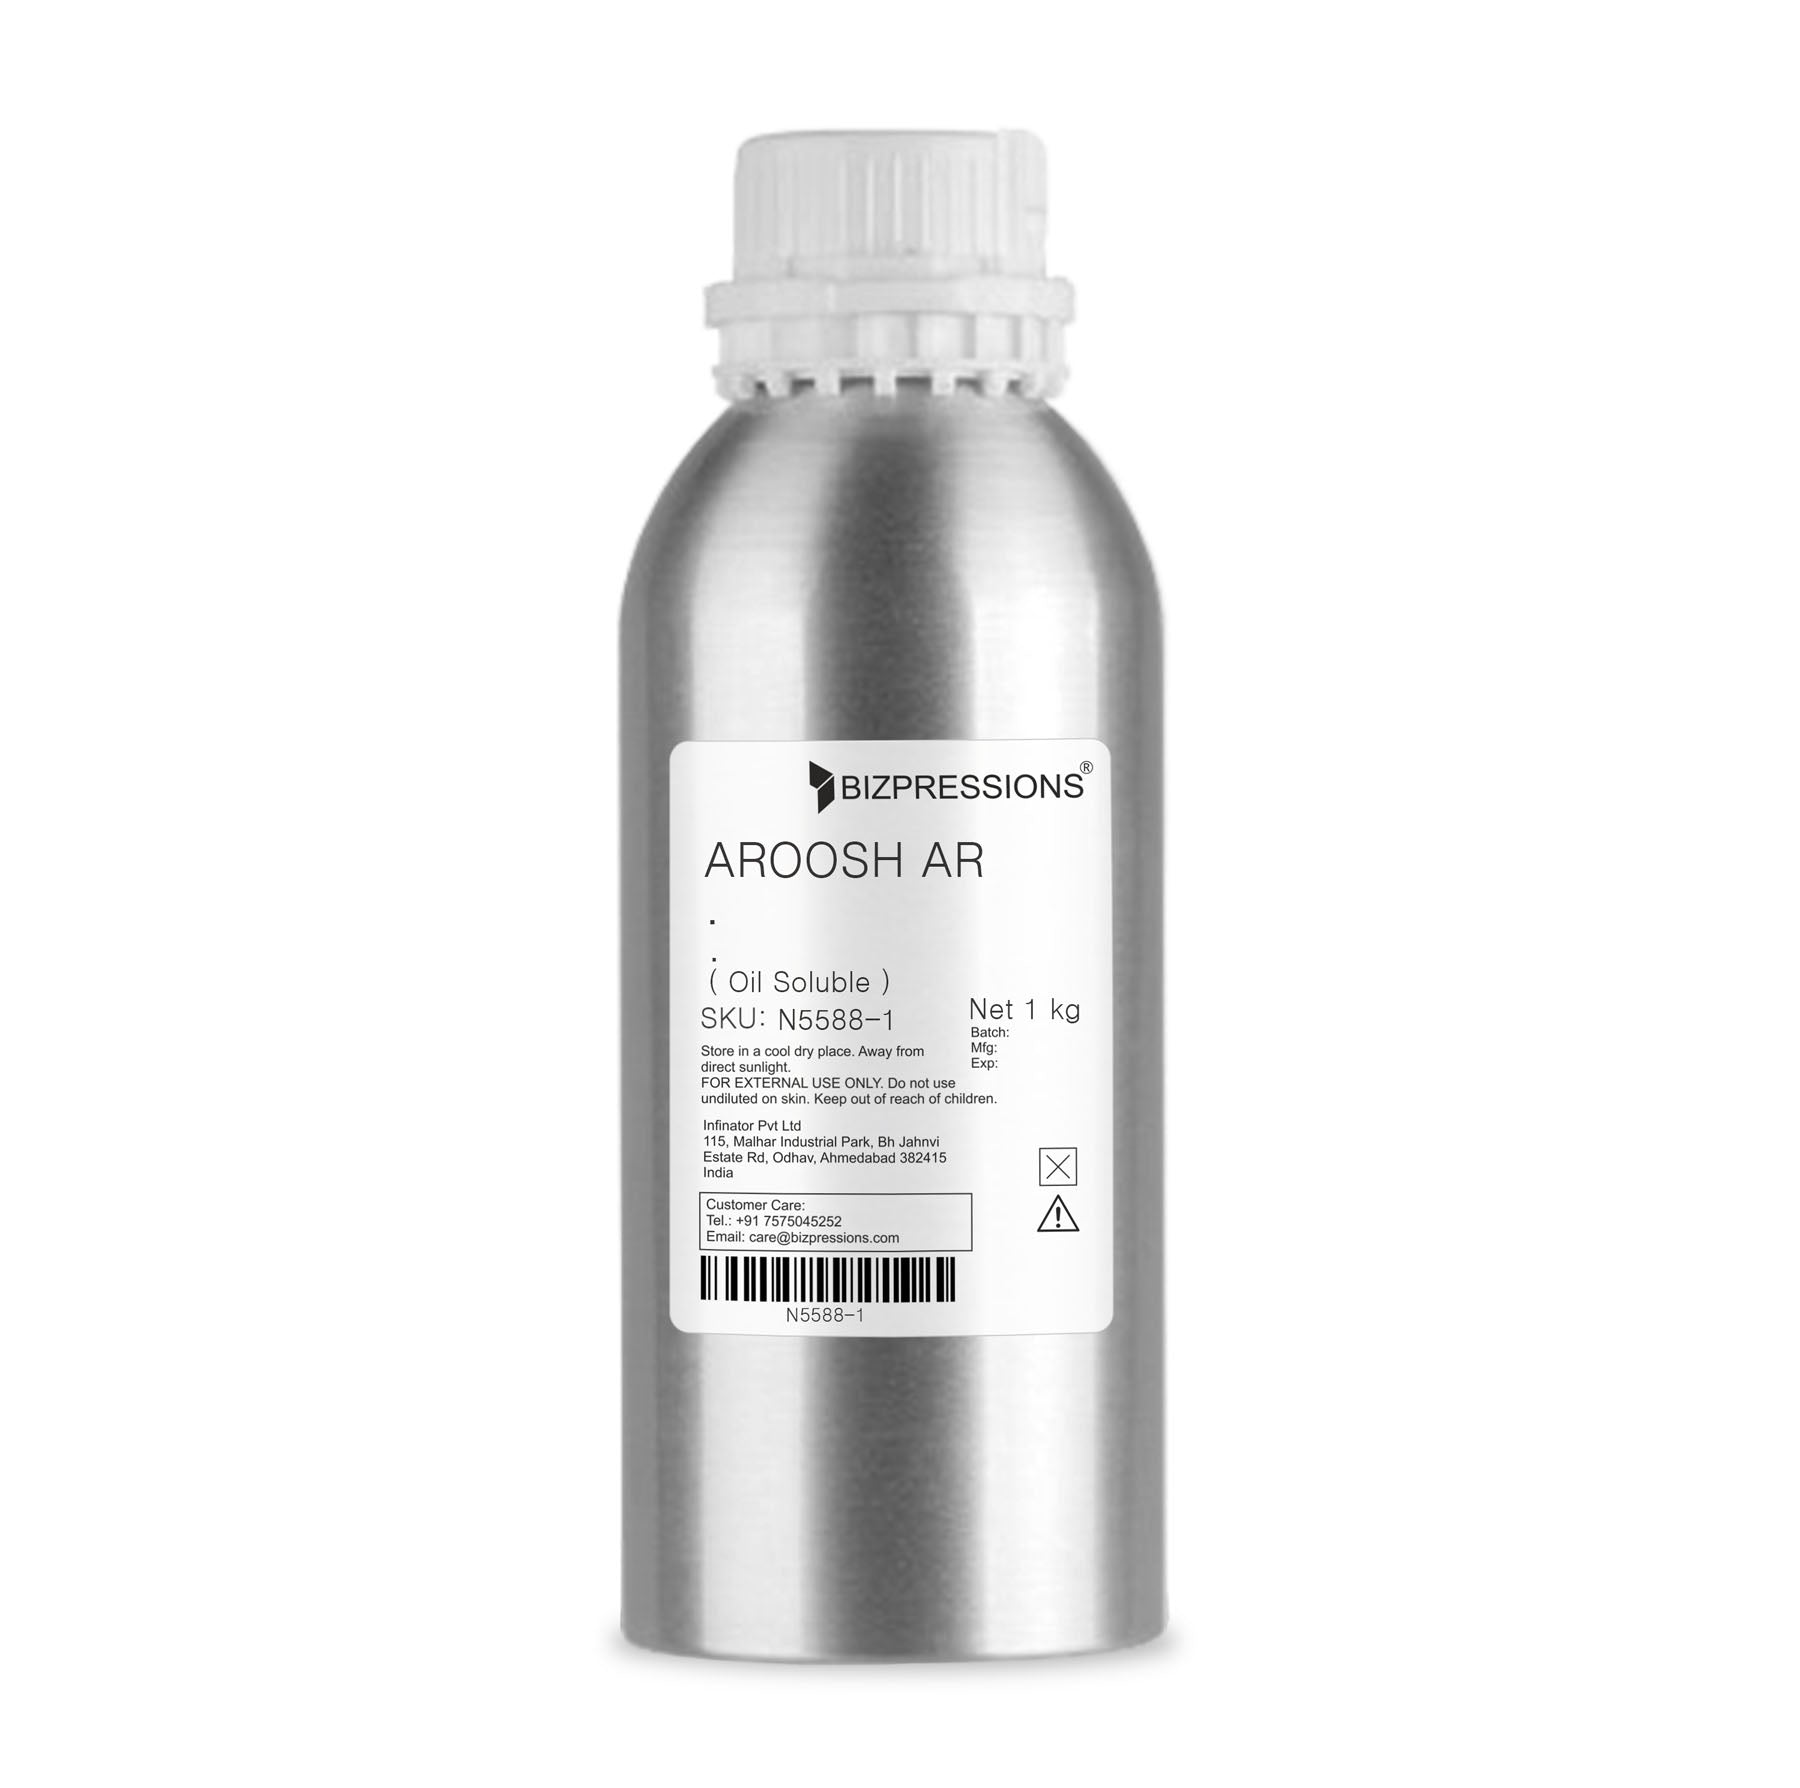 AROOSH AR - Fragrance ( Oil Soluble ) - 1 kg